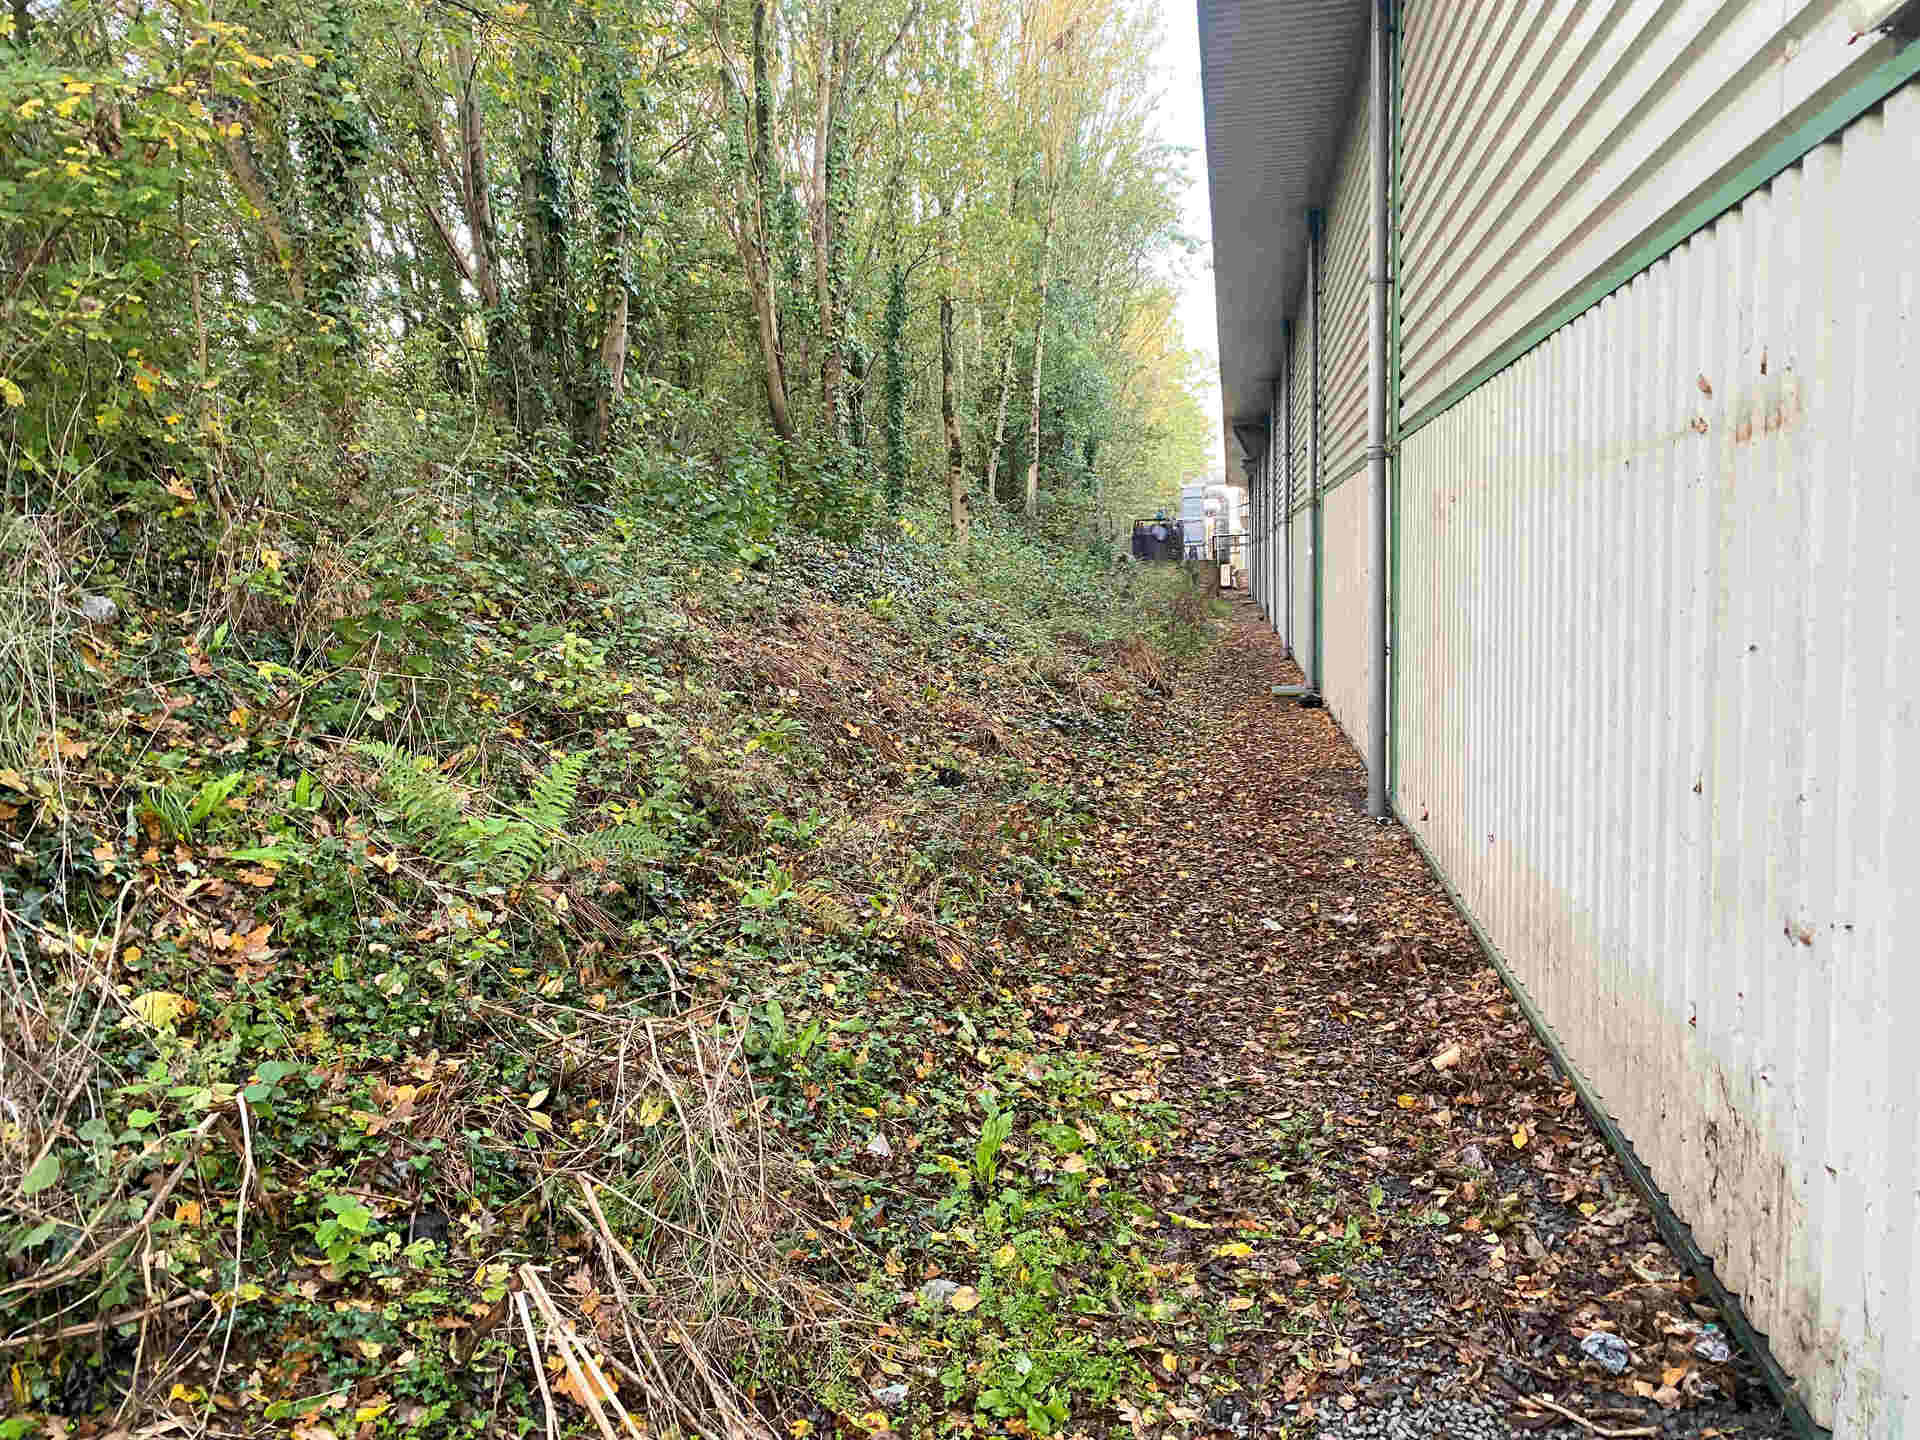 Factory Road Access & Retaining Wall Barnstaple North Devon